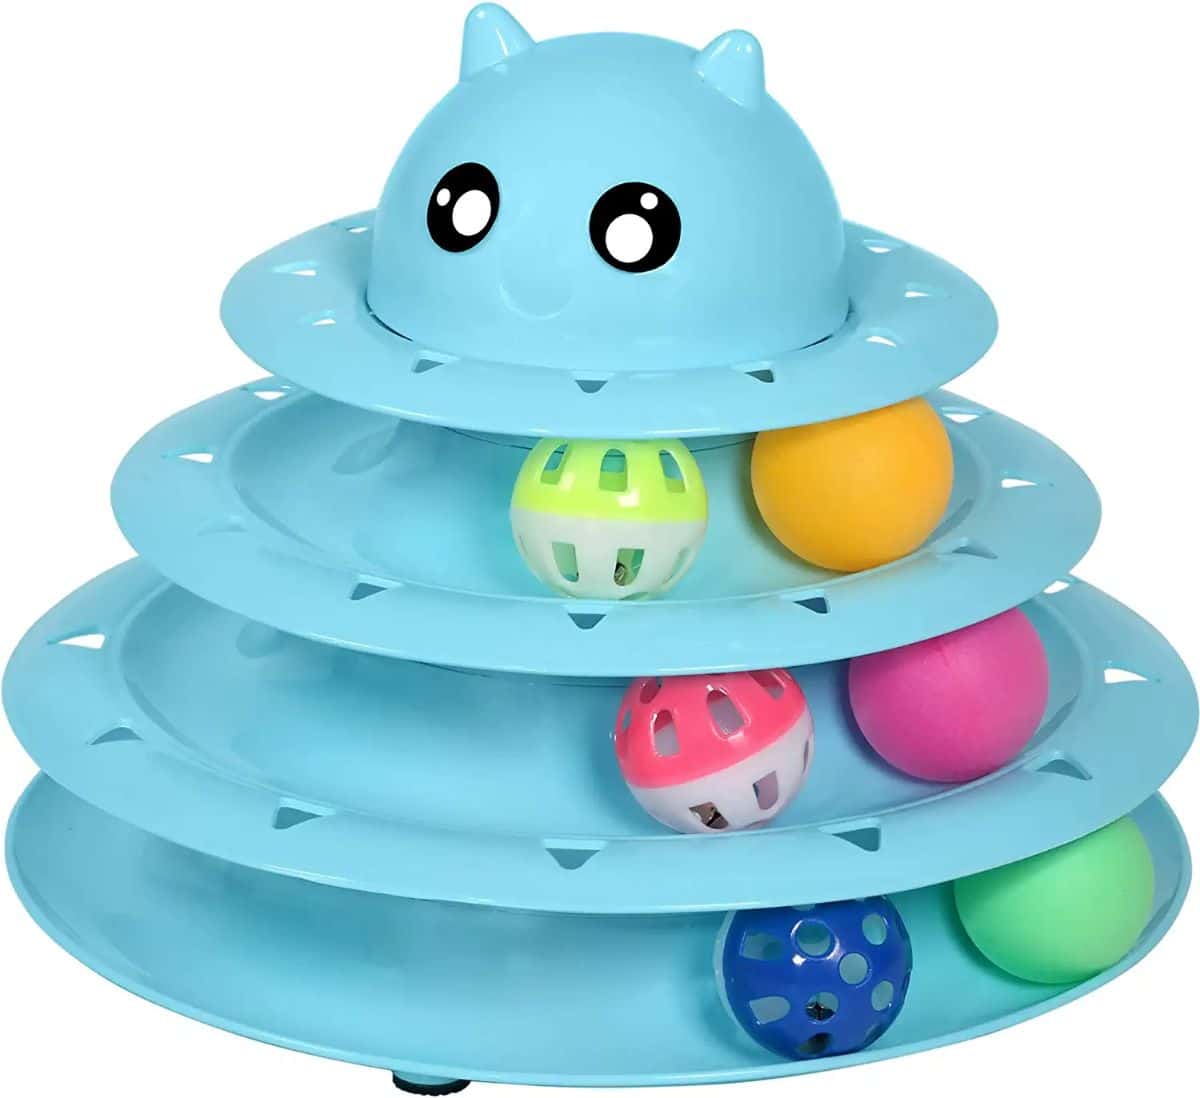 A blue plastic cat toy.